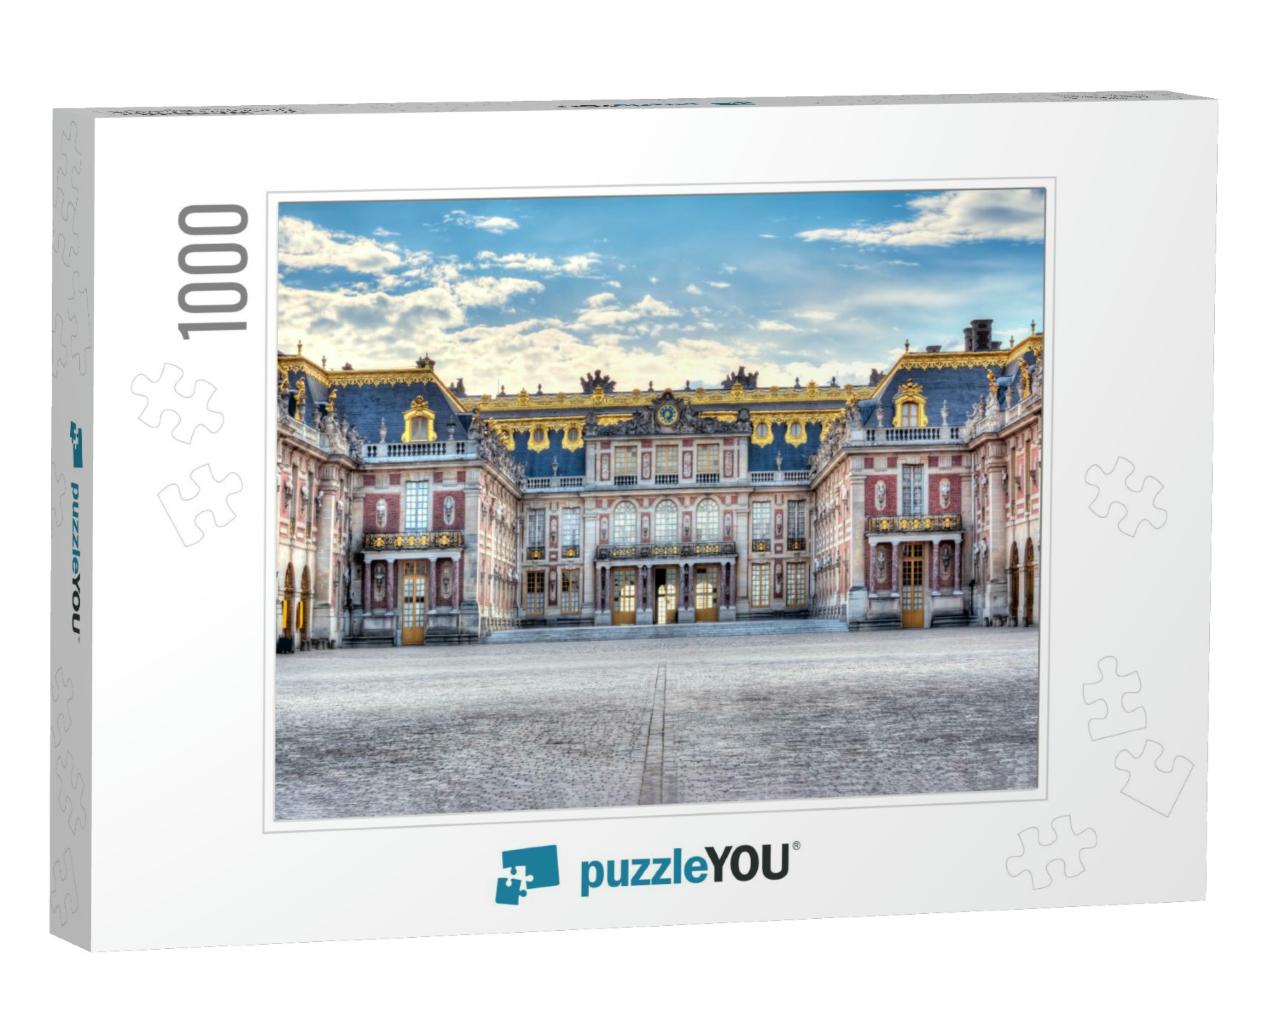 Versailles Palace, Paris Suburbs, France... Jigsaw Puzzle with 1000 pieces